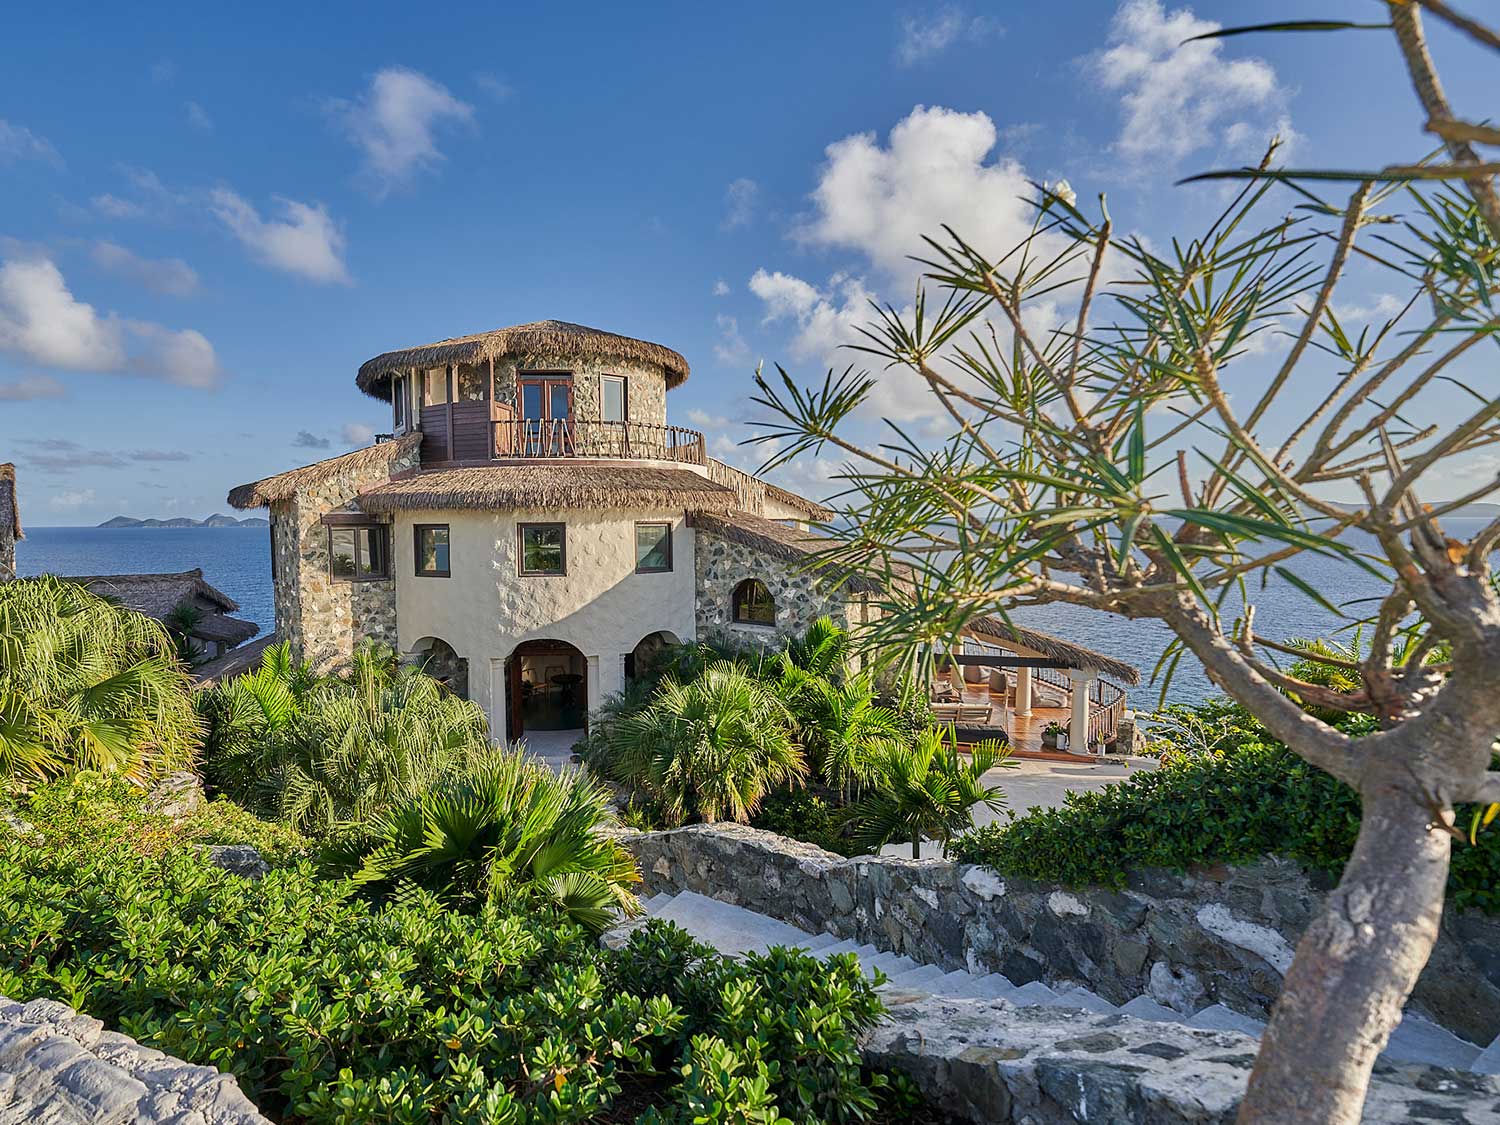 A villa overlooking the ocean on the British Virgin Islands.